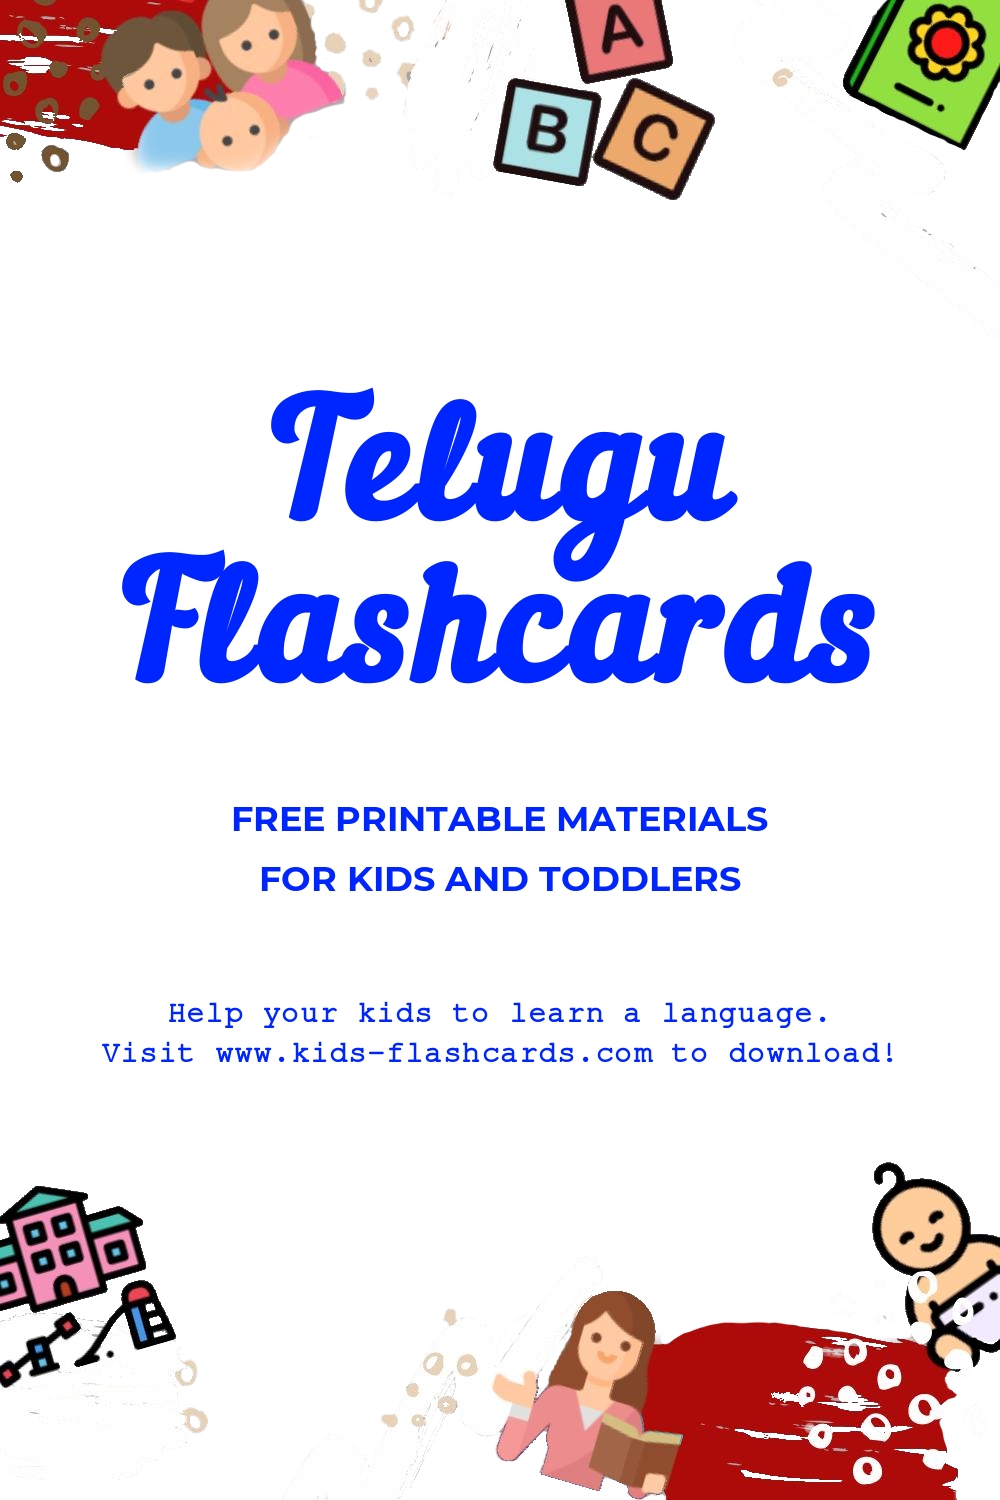 Worksheets to learn Telugu language